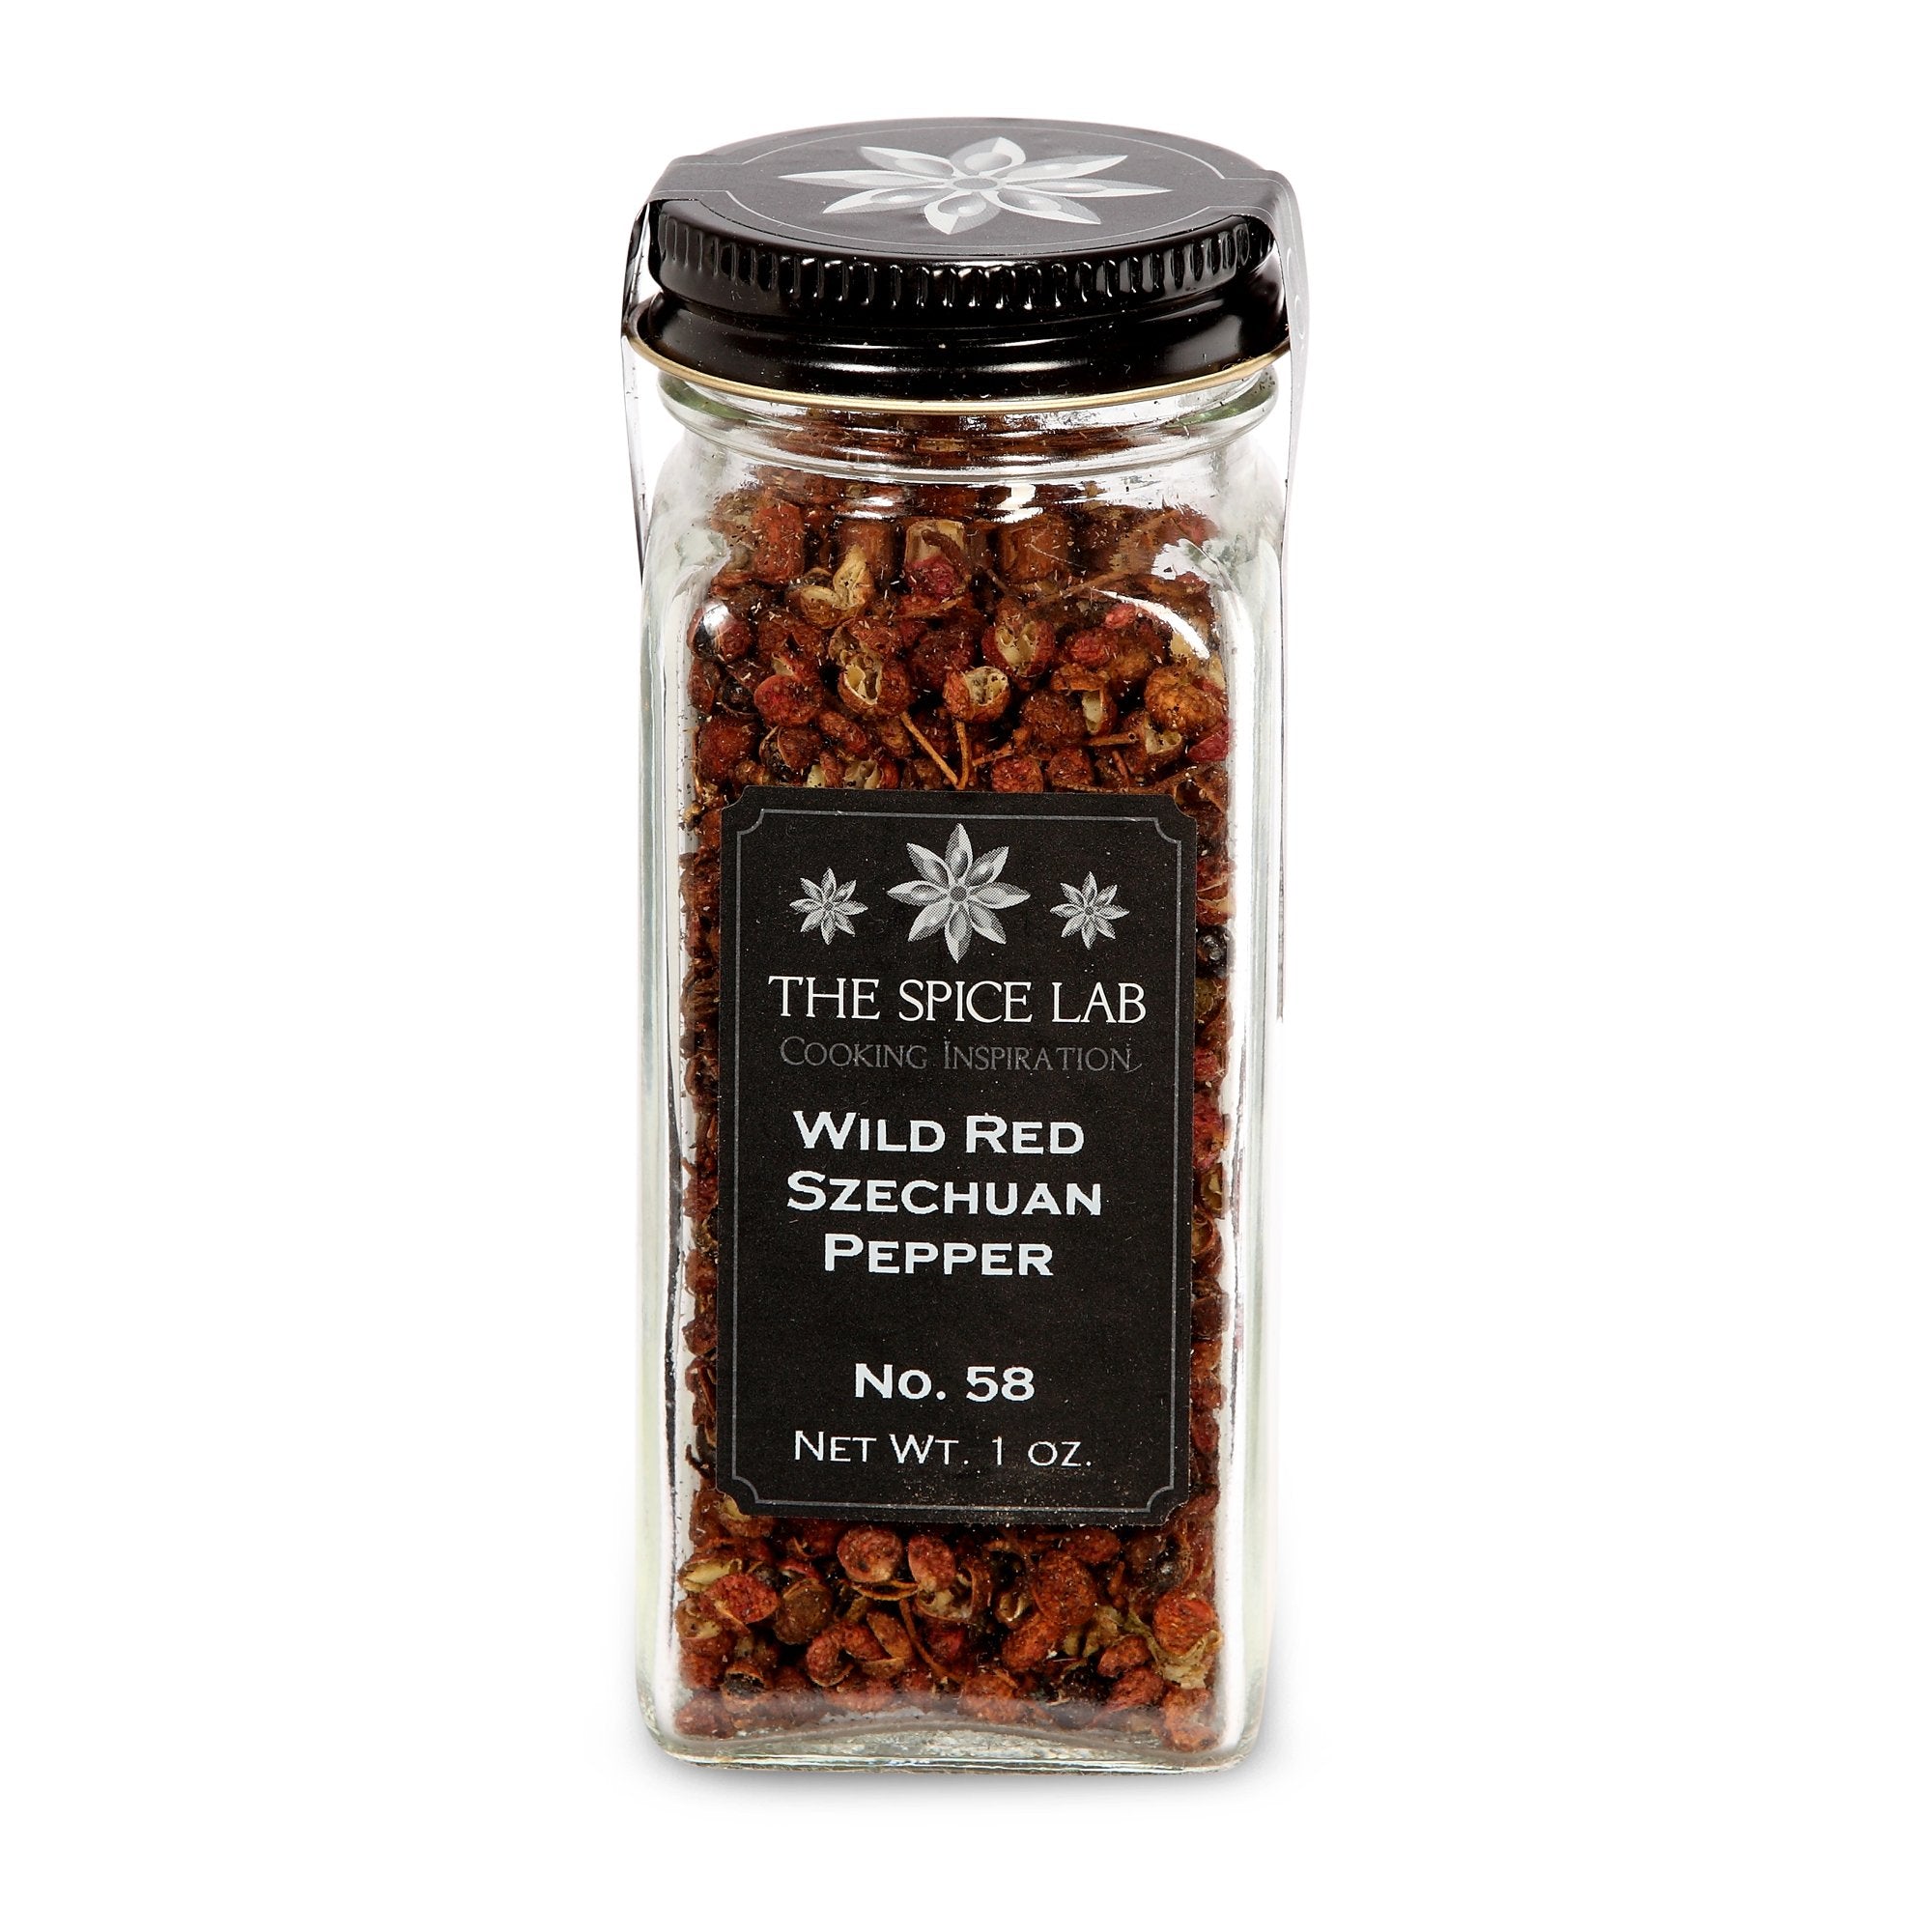 Battle of the Spices: Szechuan Peppercorn vs. Wasabi Root (cont'd.)